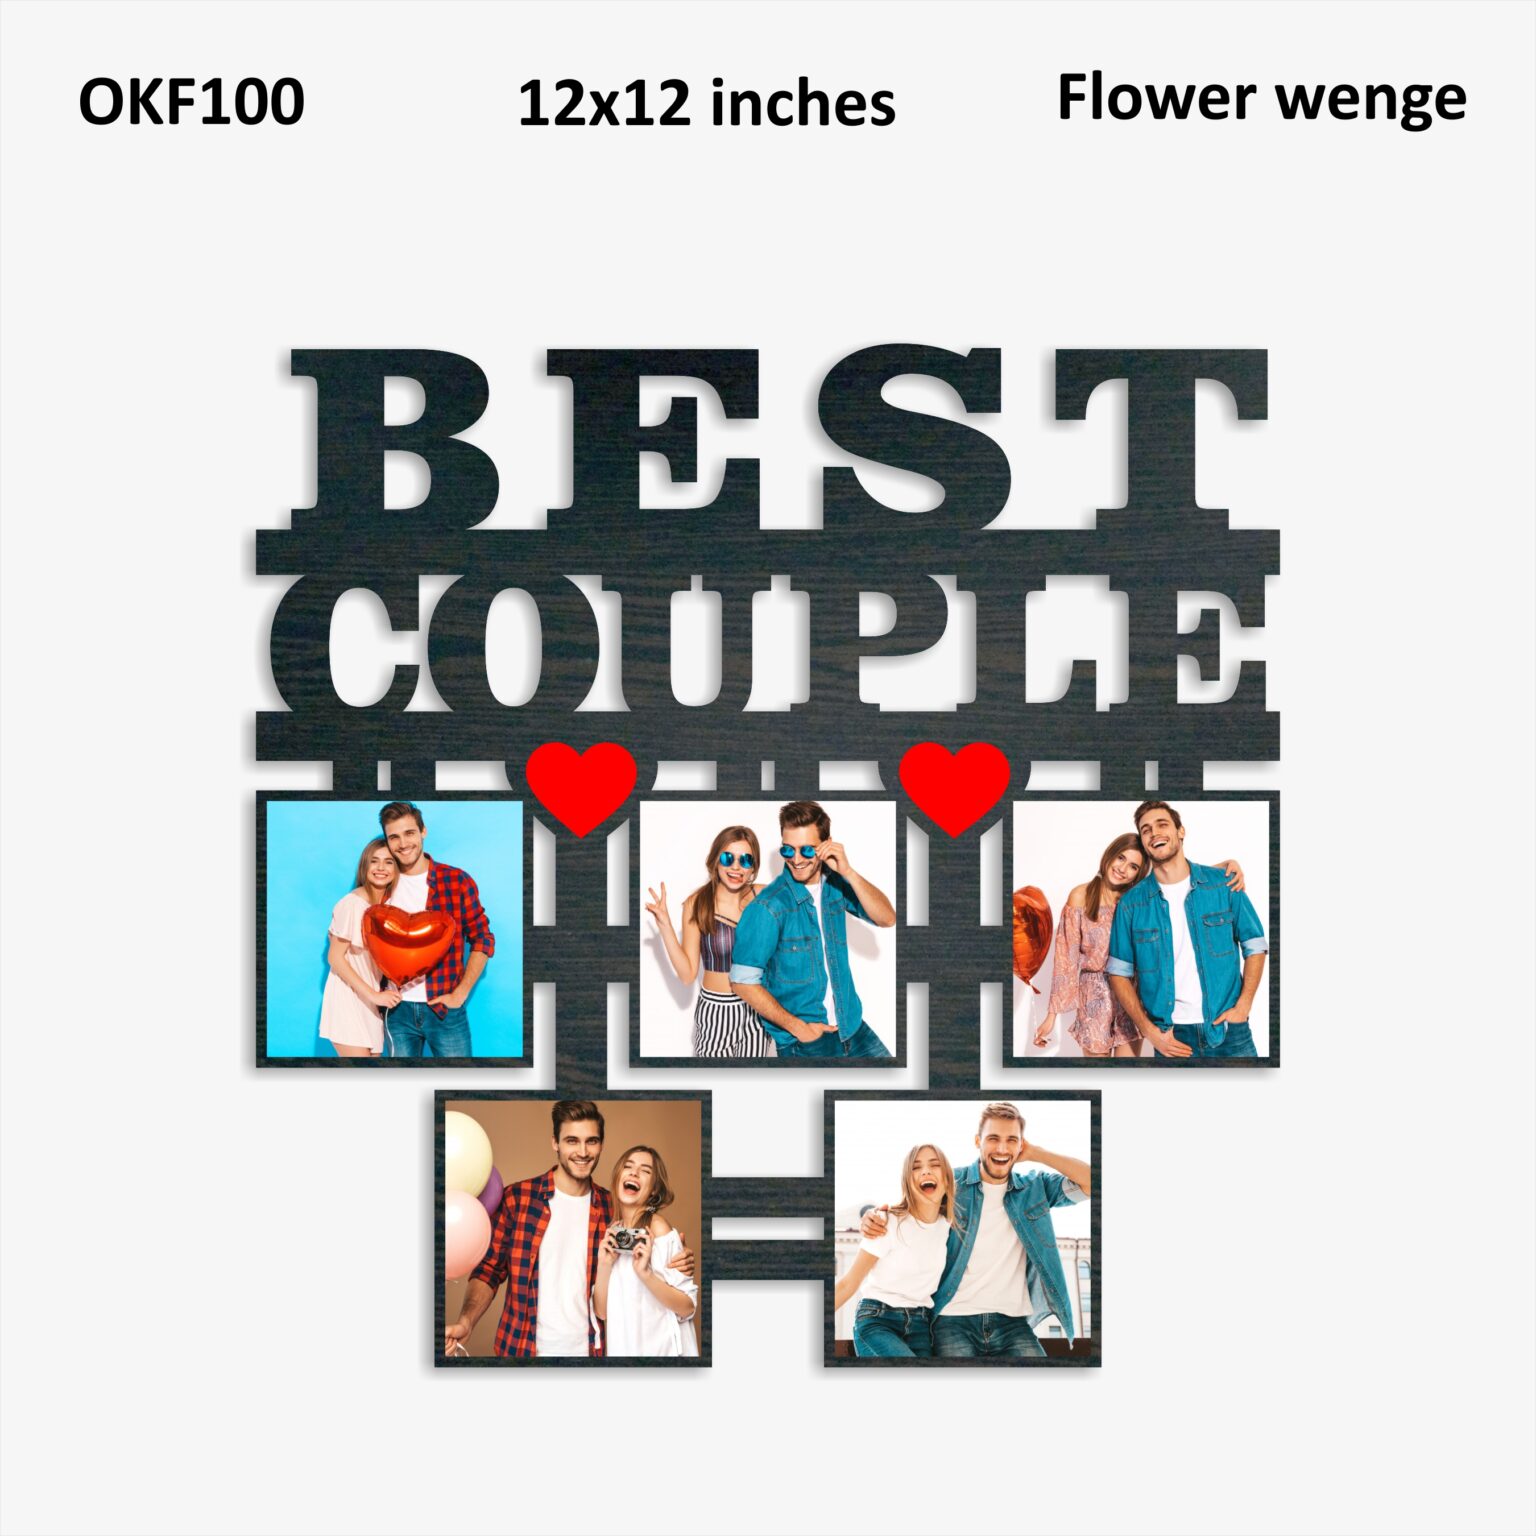 Best Couple photo frame OKF100